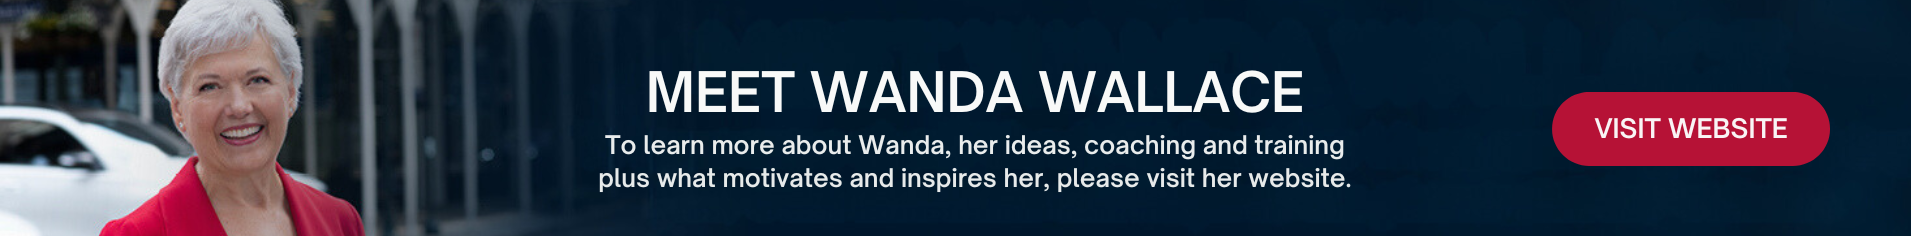 https://voiceamerica.com/shows/2450/be/Meet Wanda Banner re-sized .png